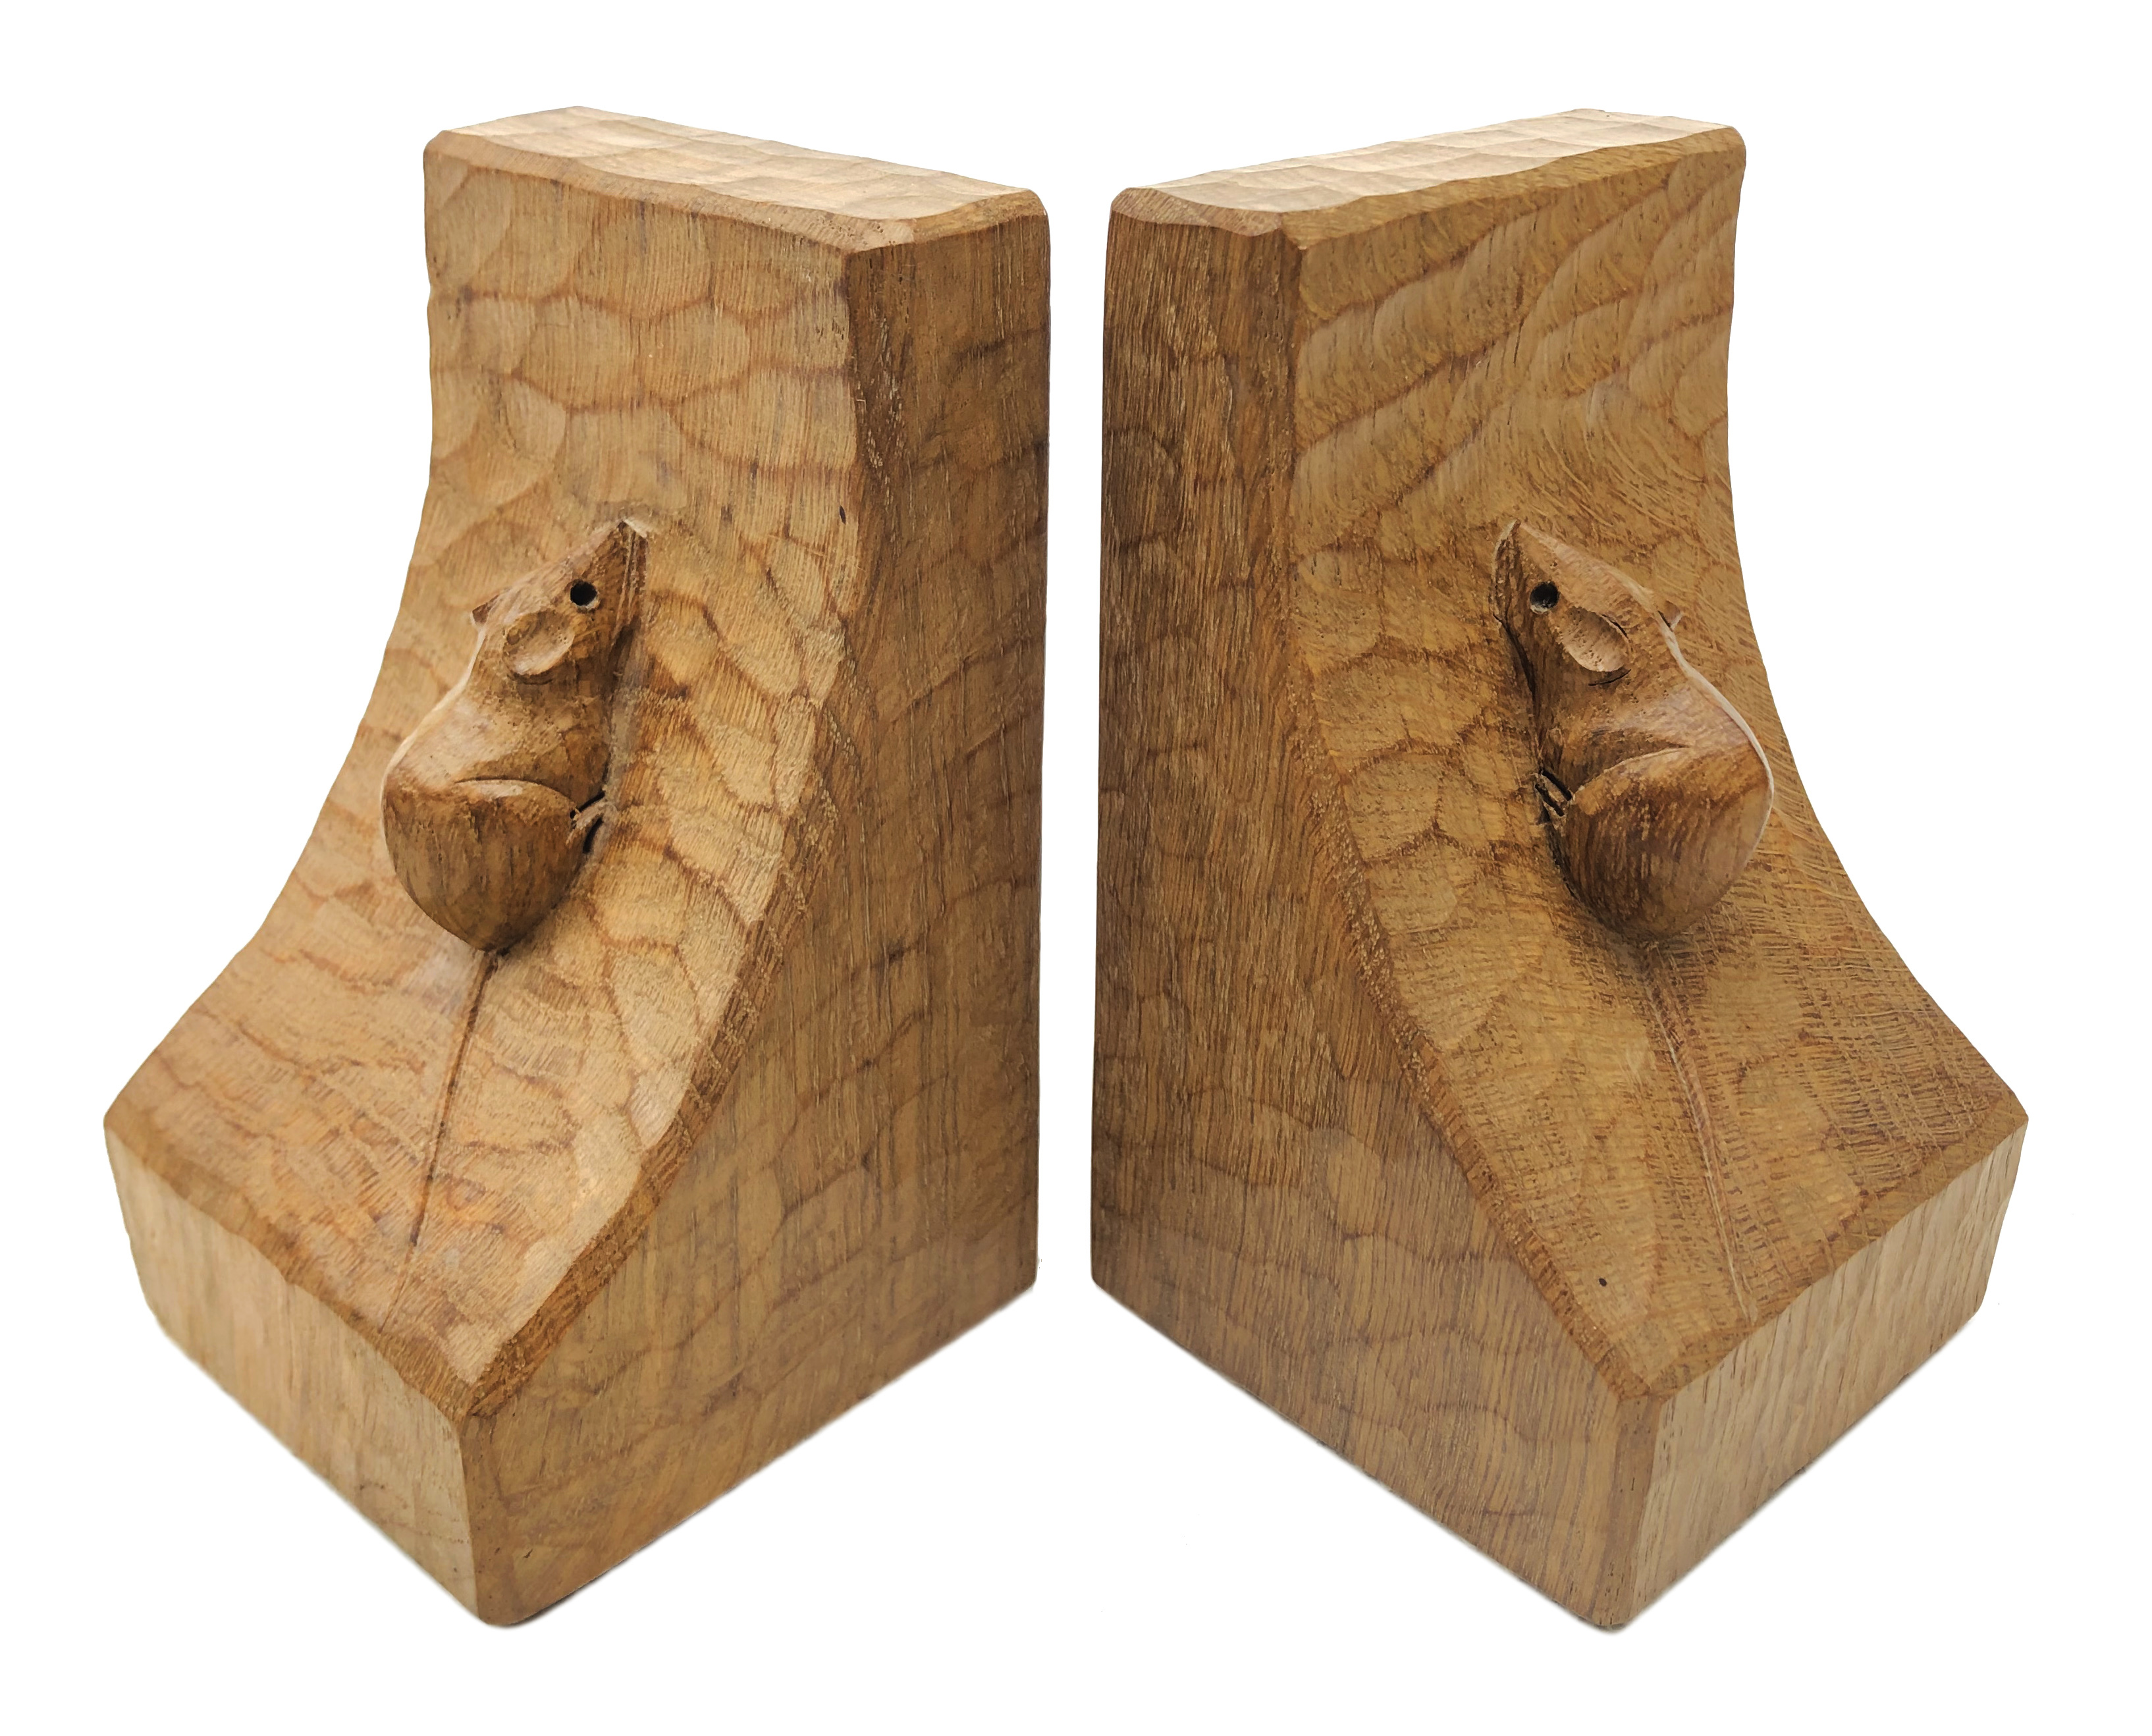 'Mouseman' pair adzed oak bookends by Robert Thompson of Kilburn, H15.